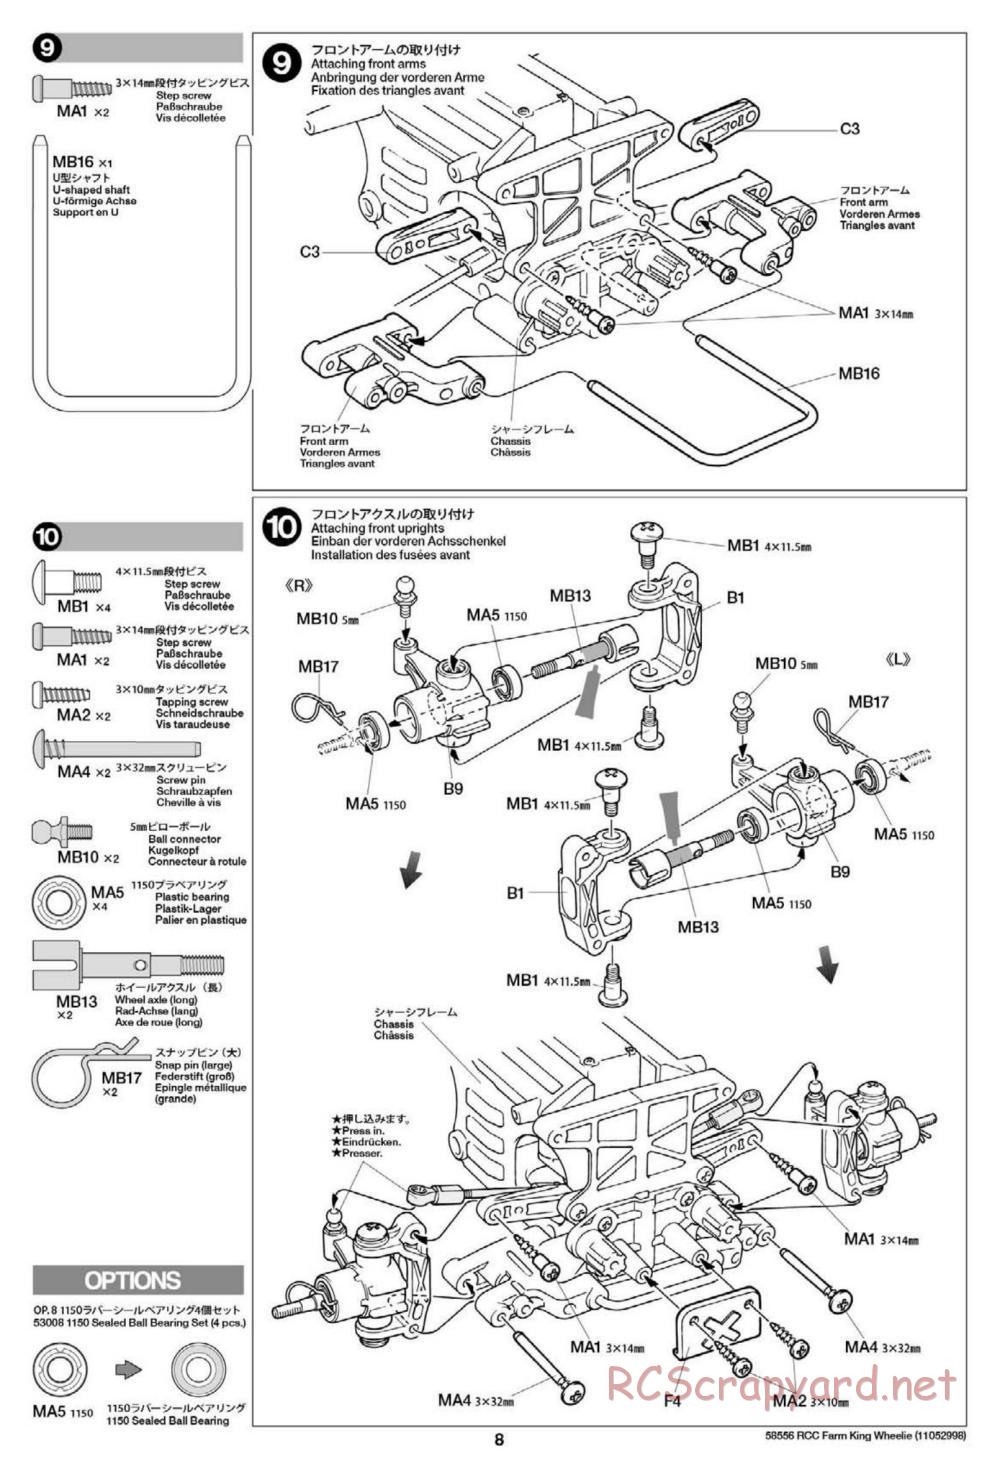 Tamiya - Farm King Wheelie Chassis - Manual - Page 8